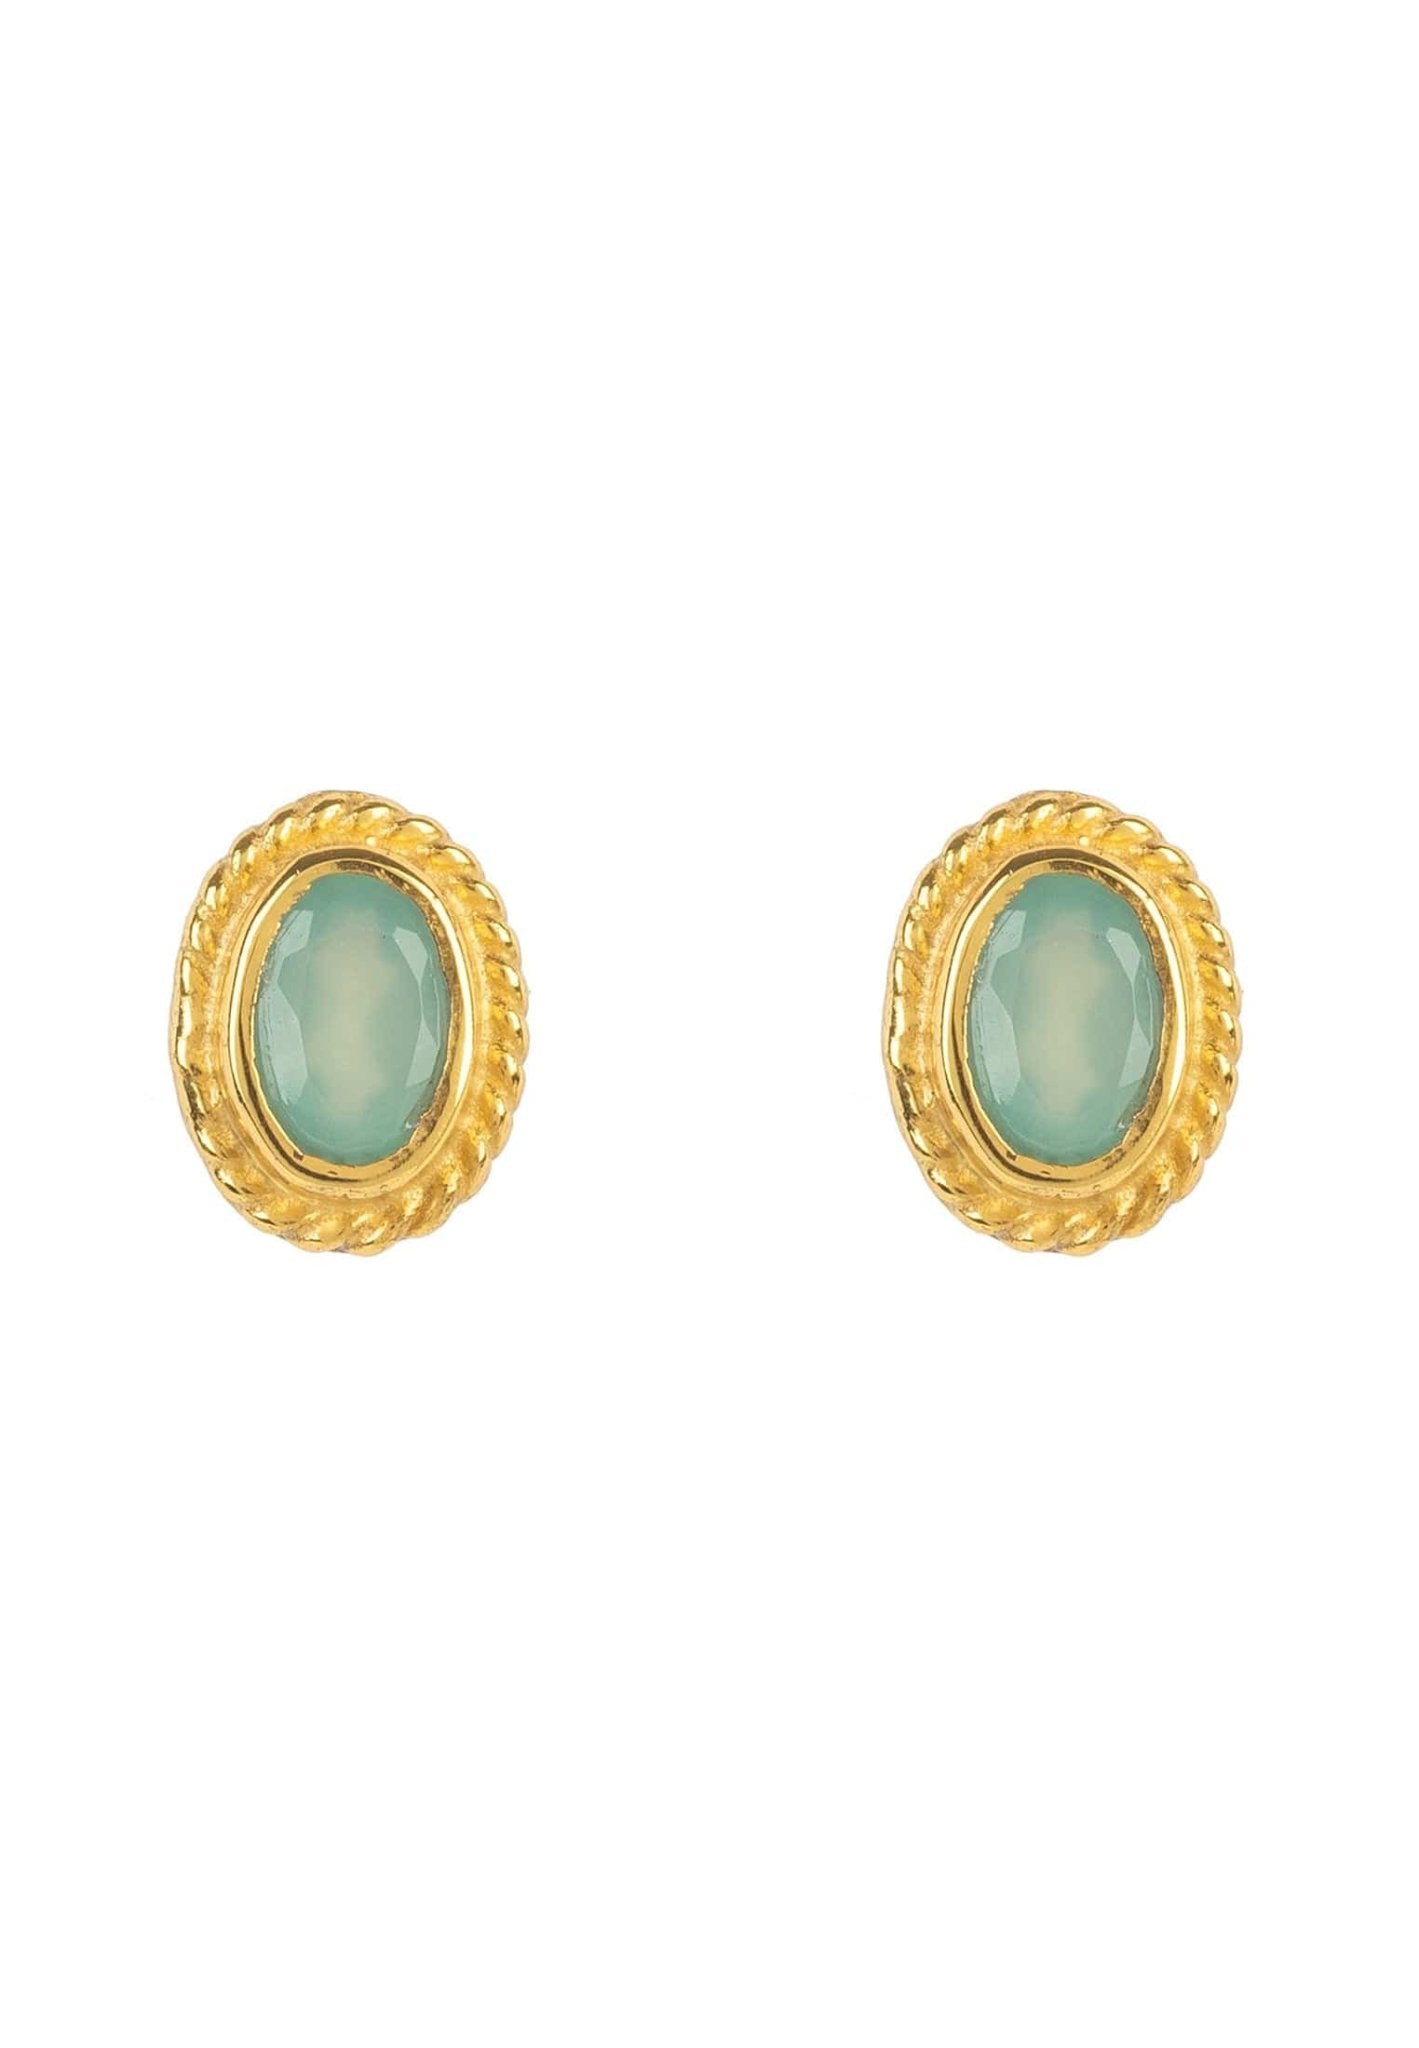 Birthstone Gold Gemstone Stud Earring March Aqua Chalcedony - LATELITA Earrings